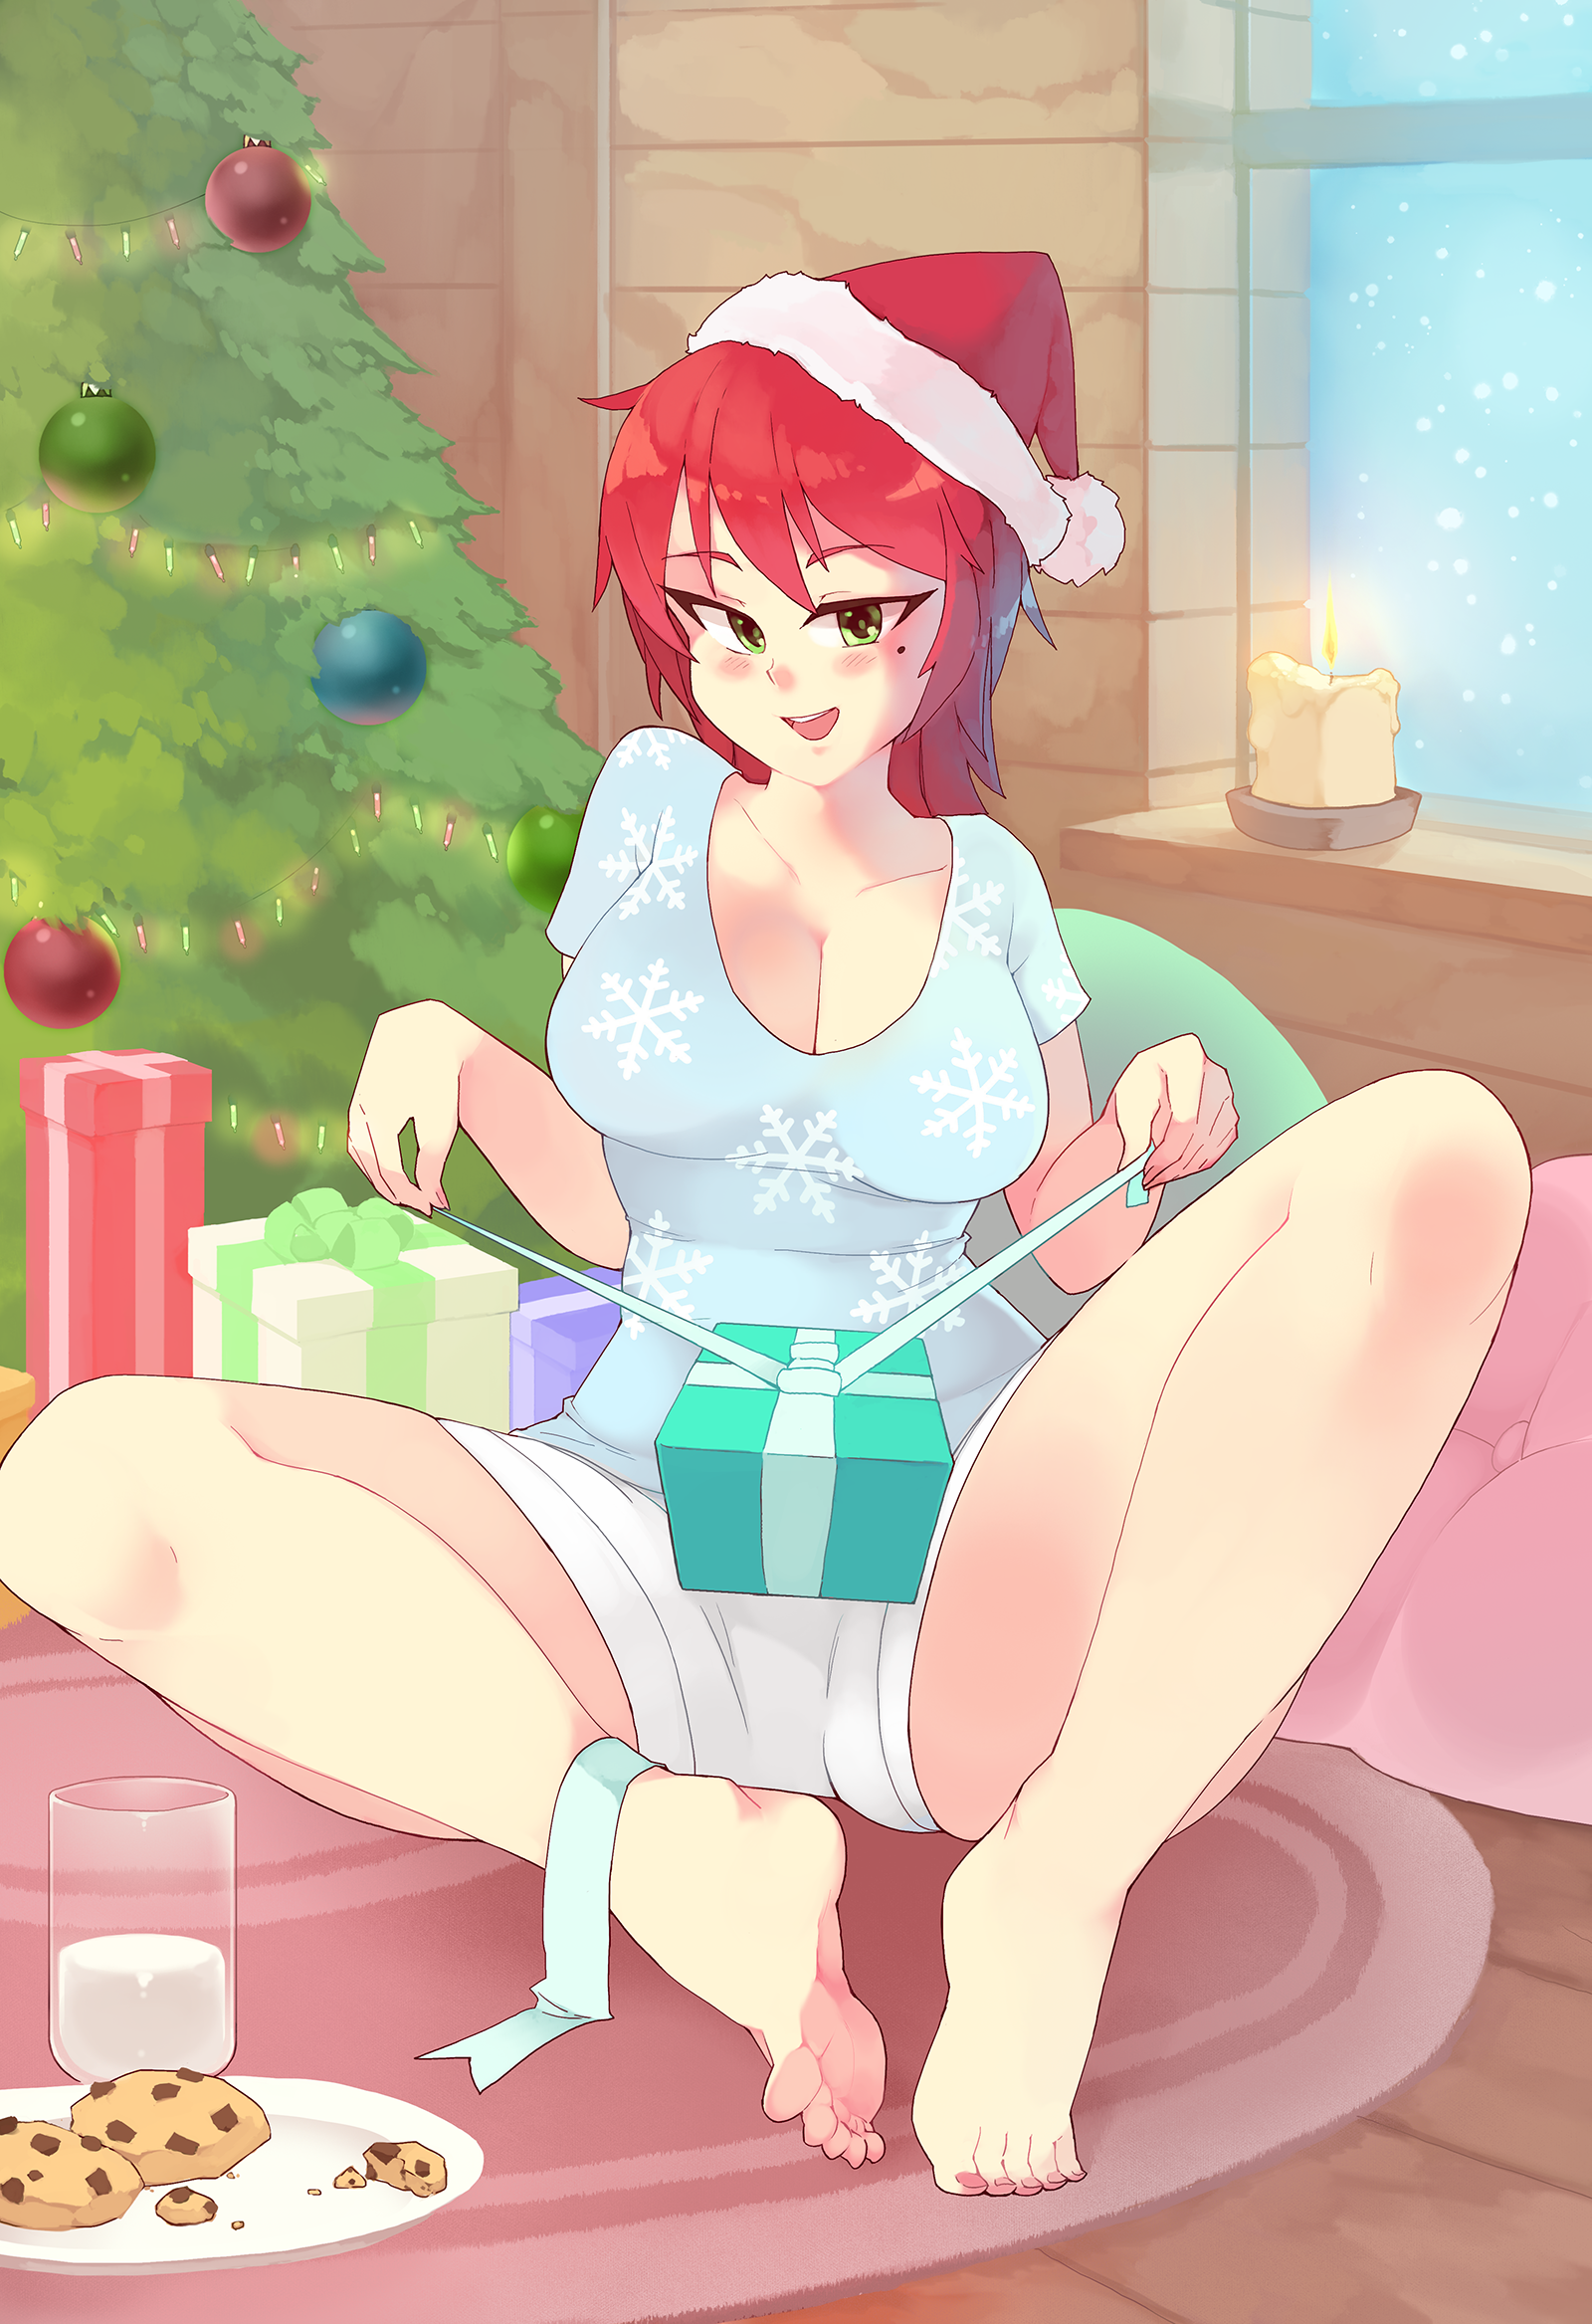 Rin's Christmas gift